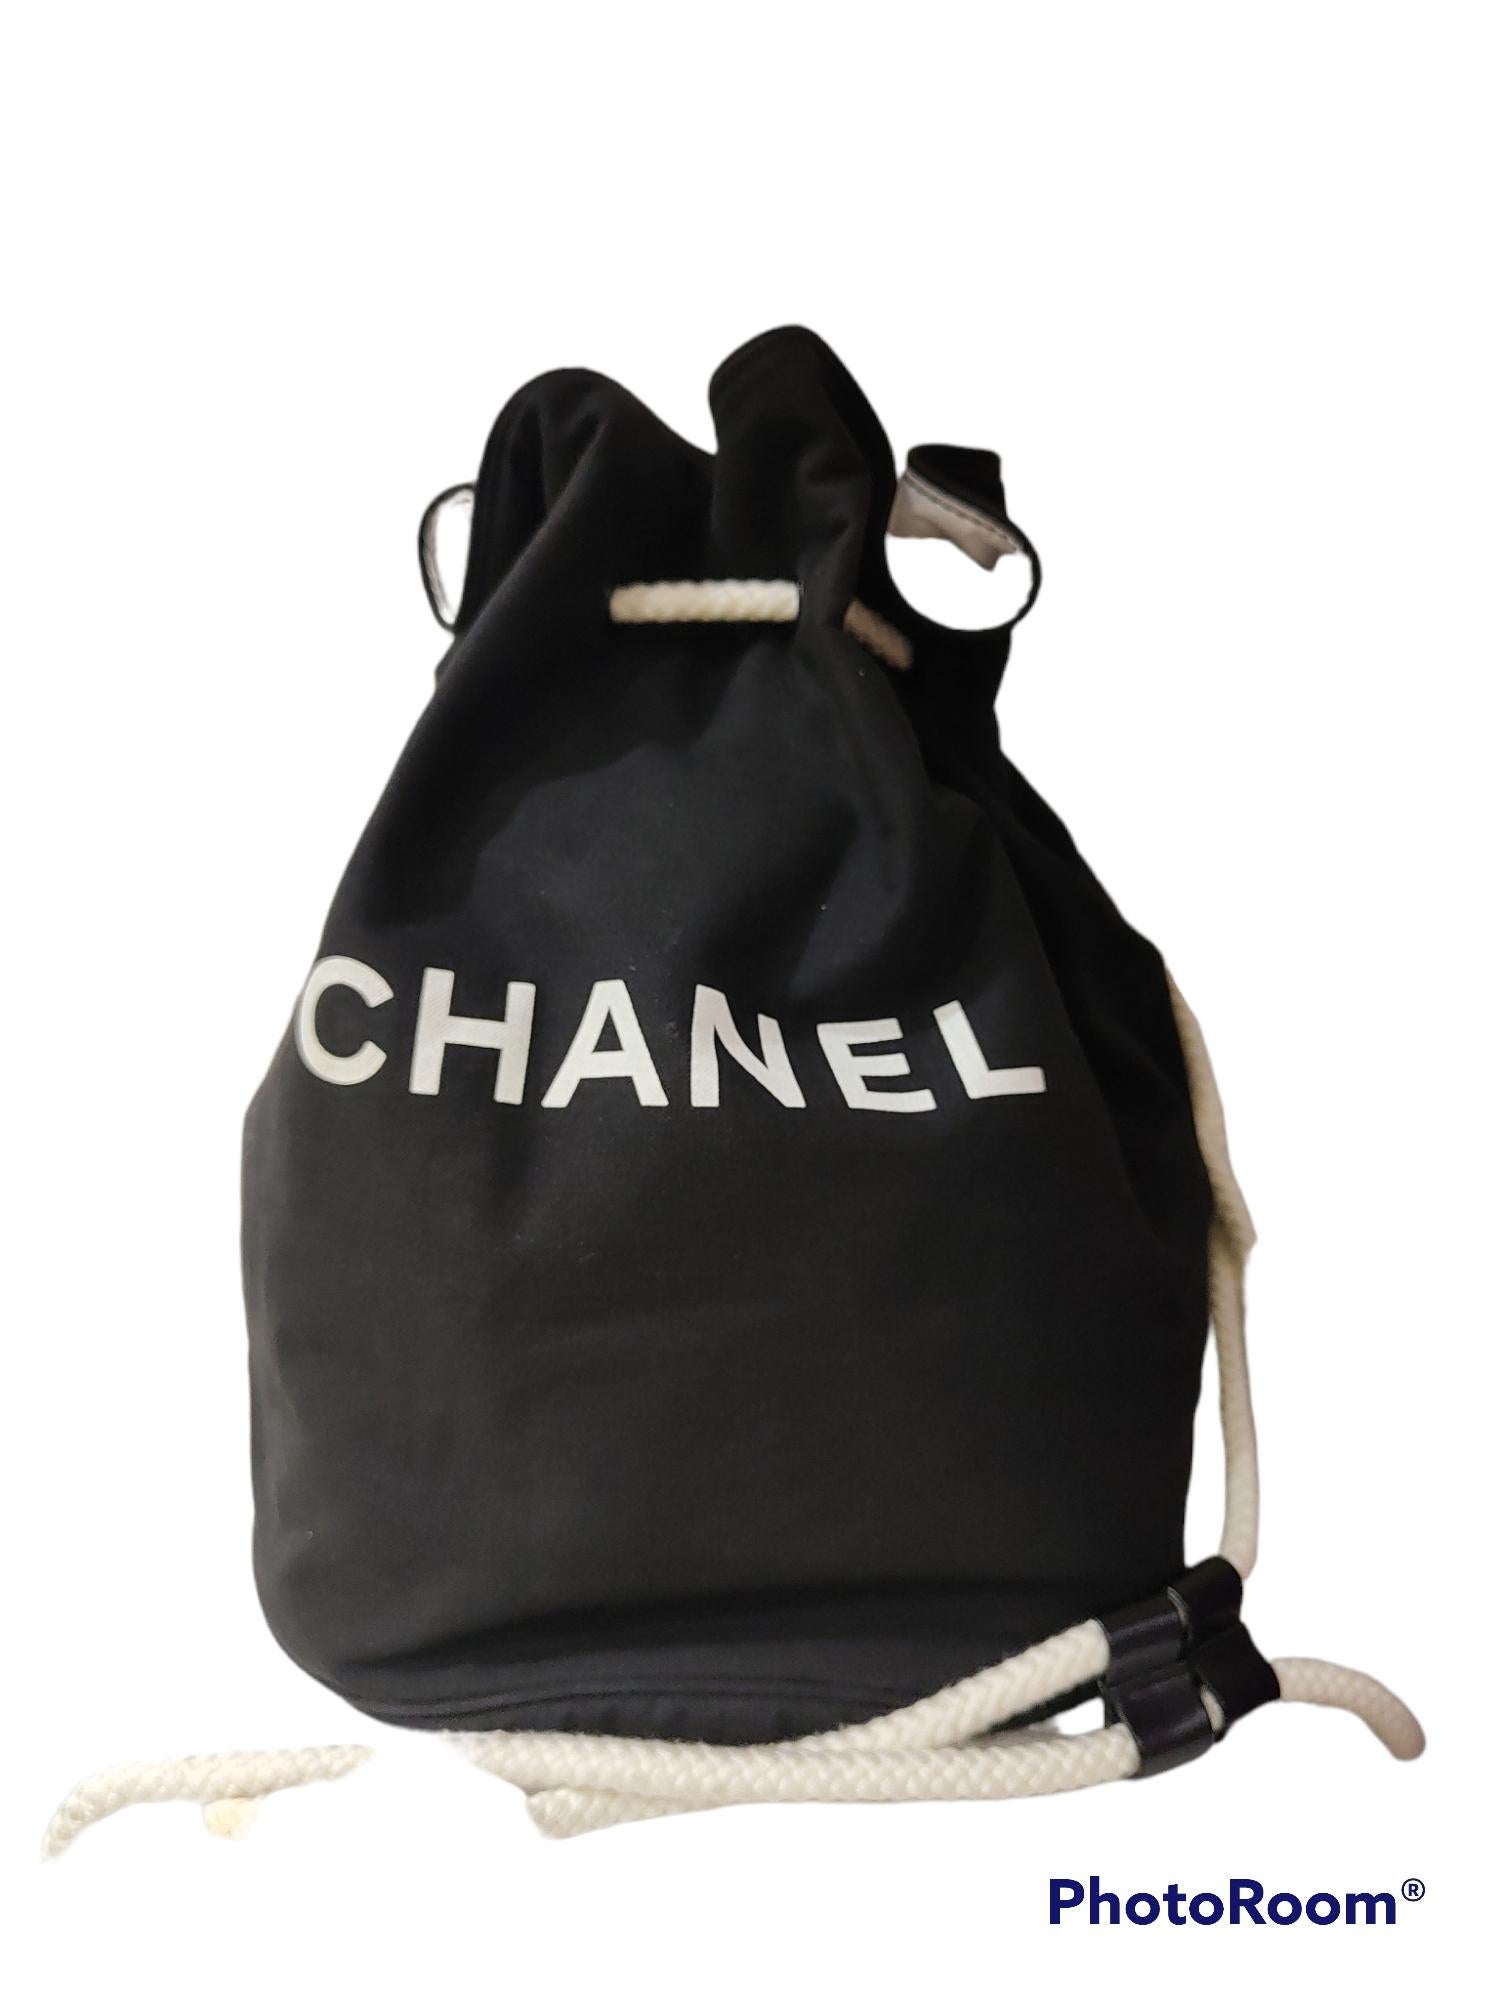 Women's or Men's Chanel black and white beach bag